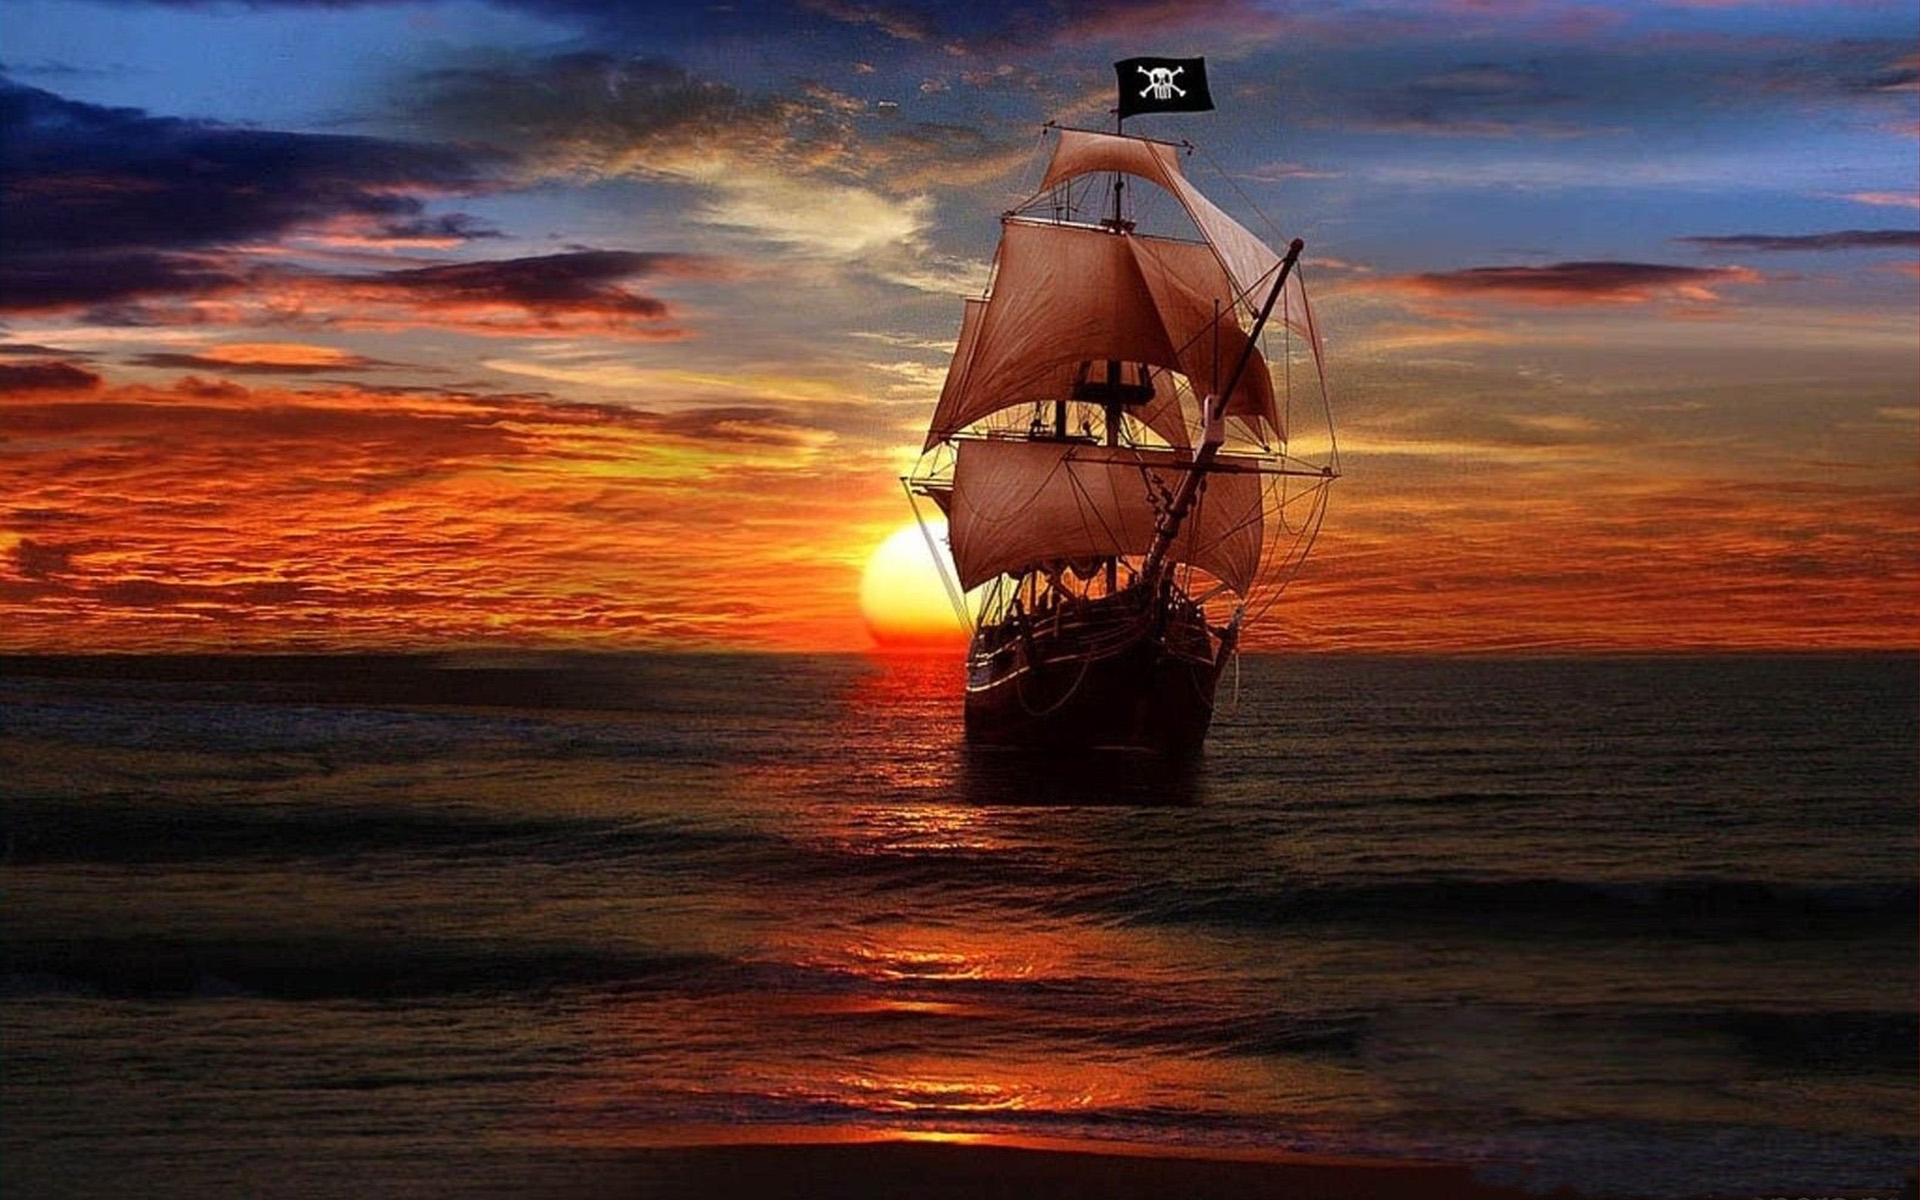 Sunset and Pirate Ship Fantasy art